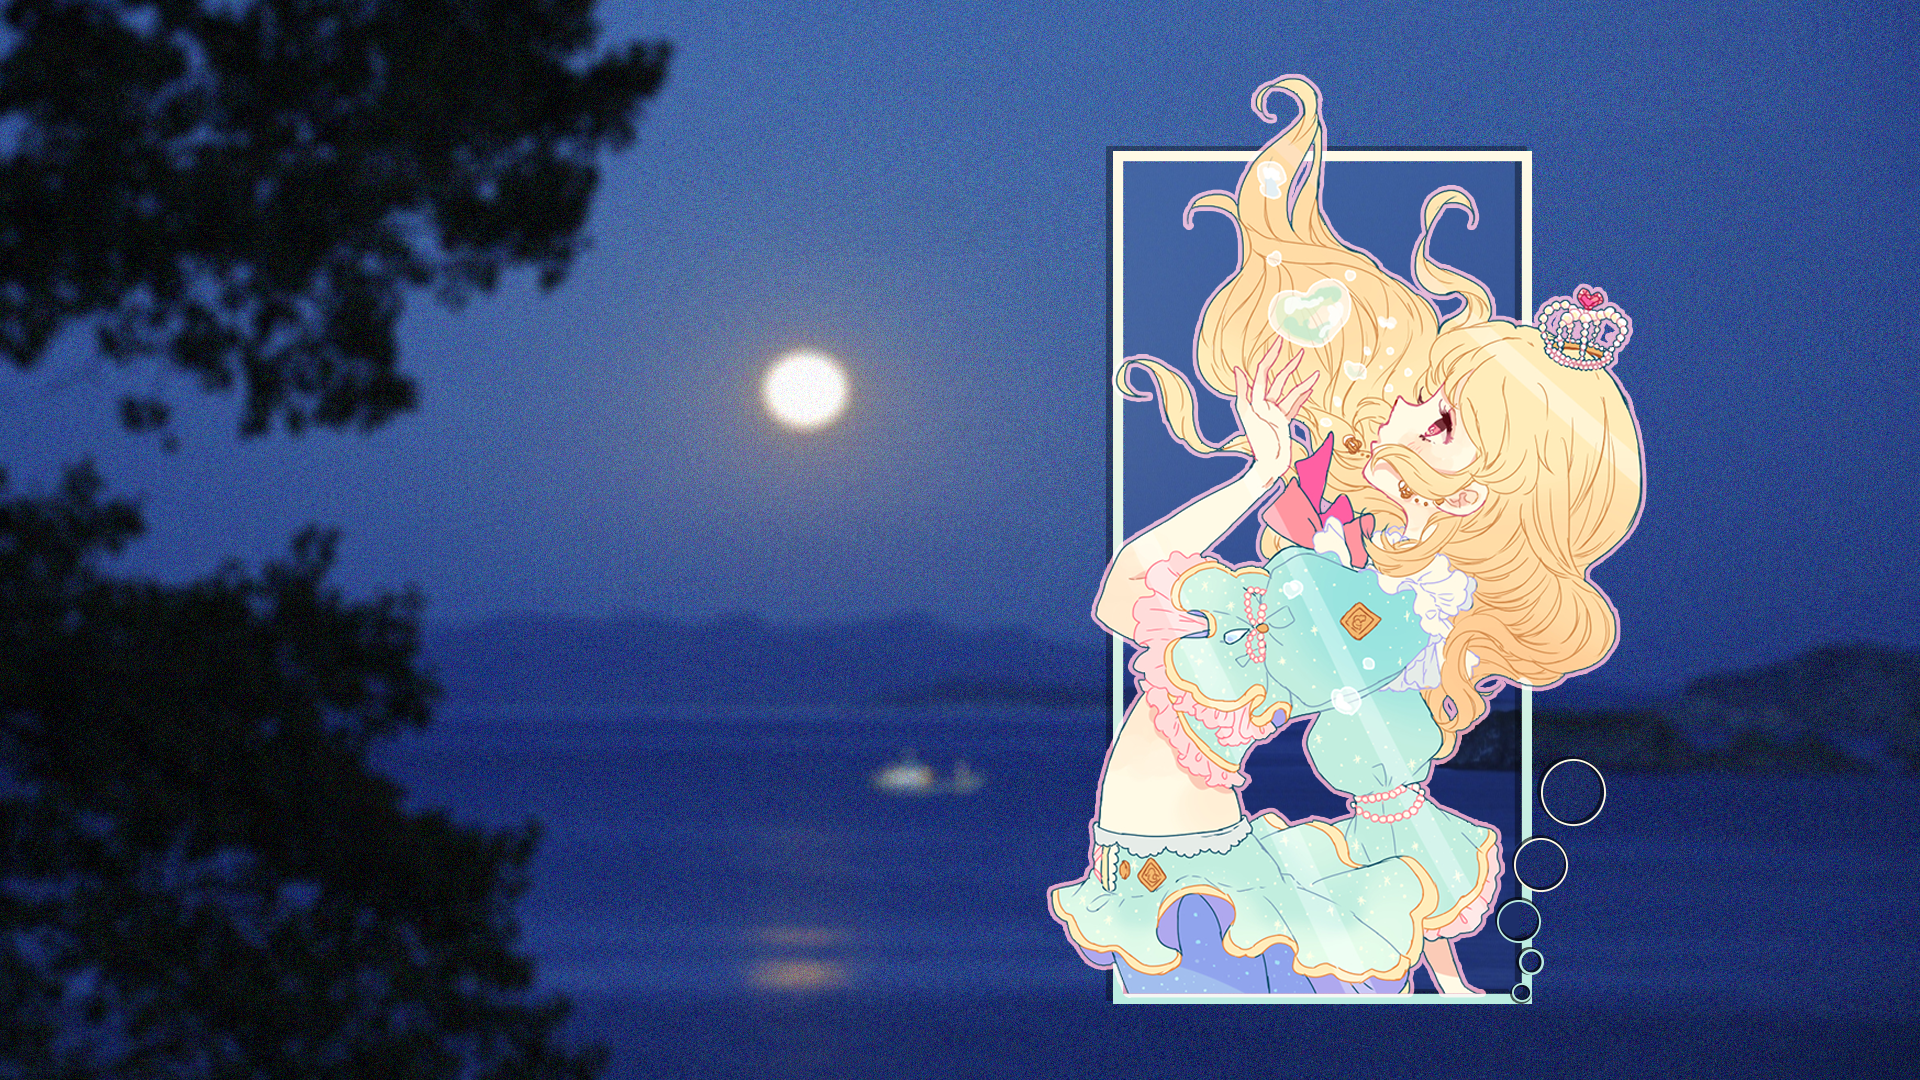 Moonlight - Other & Anime Background Wallpapers on Desktop Nexus (Image  2140298)